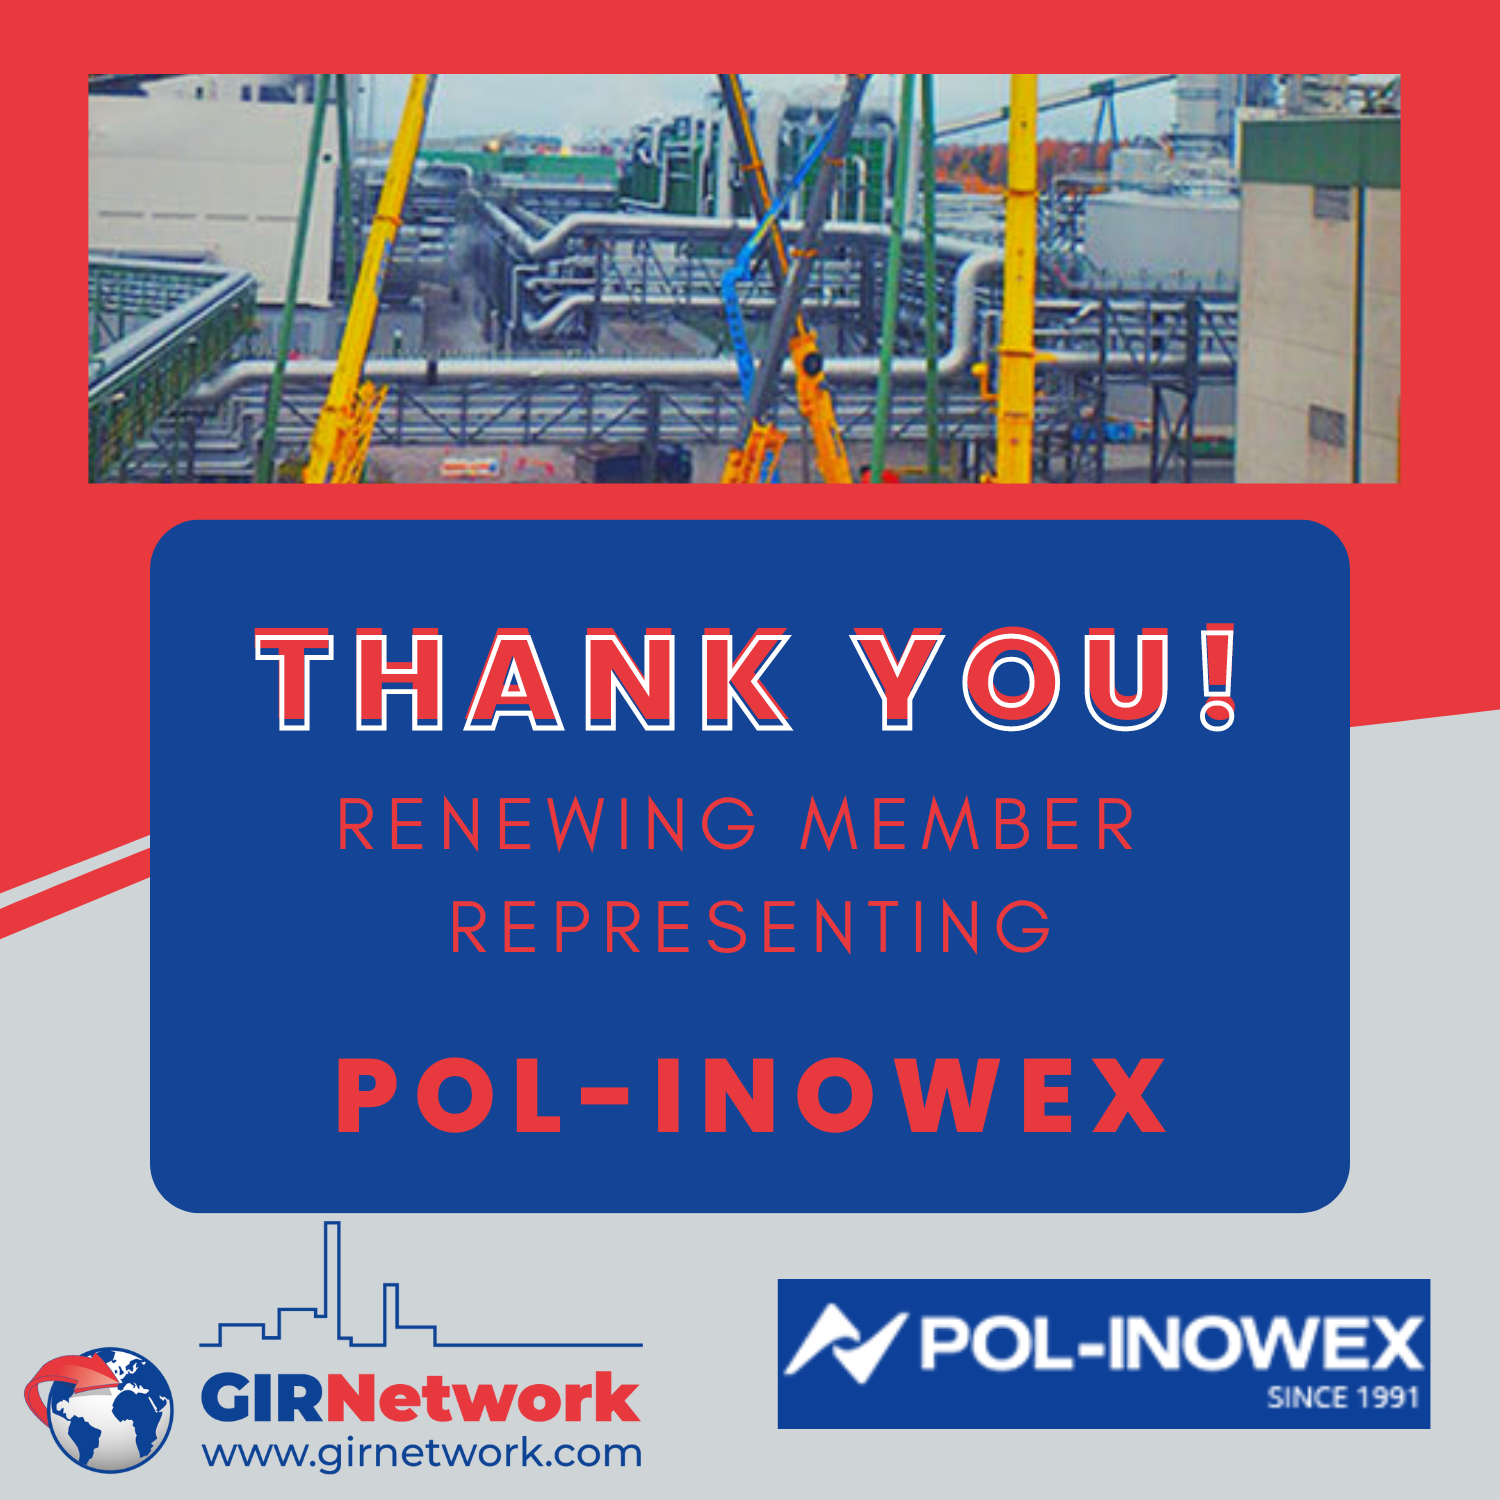 Thank you PolInowex